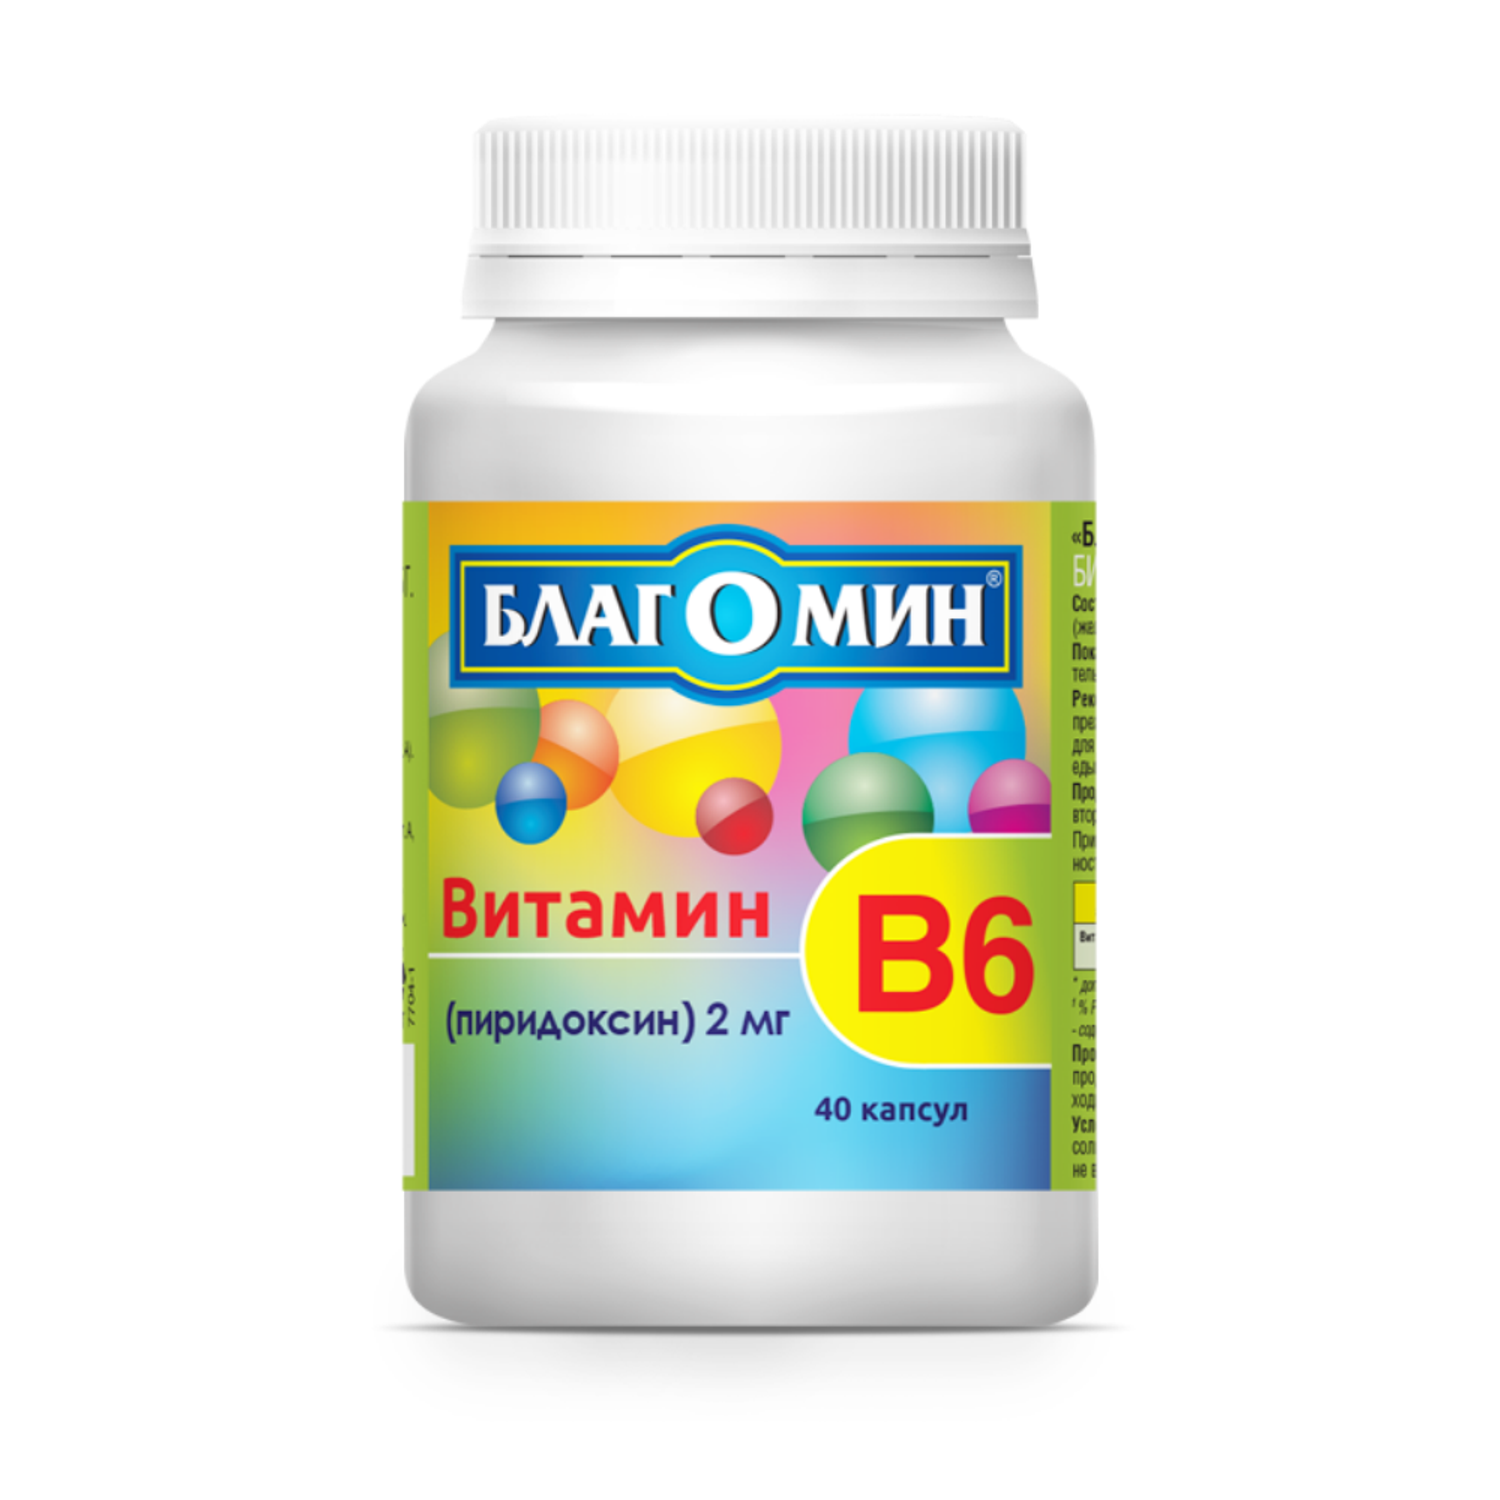 Витамины Благомин В6 Пиридоксин 40 капсул - фото 1